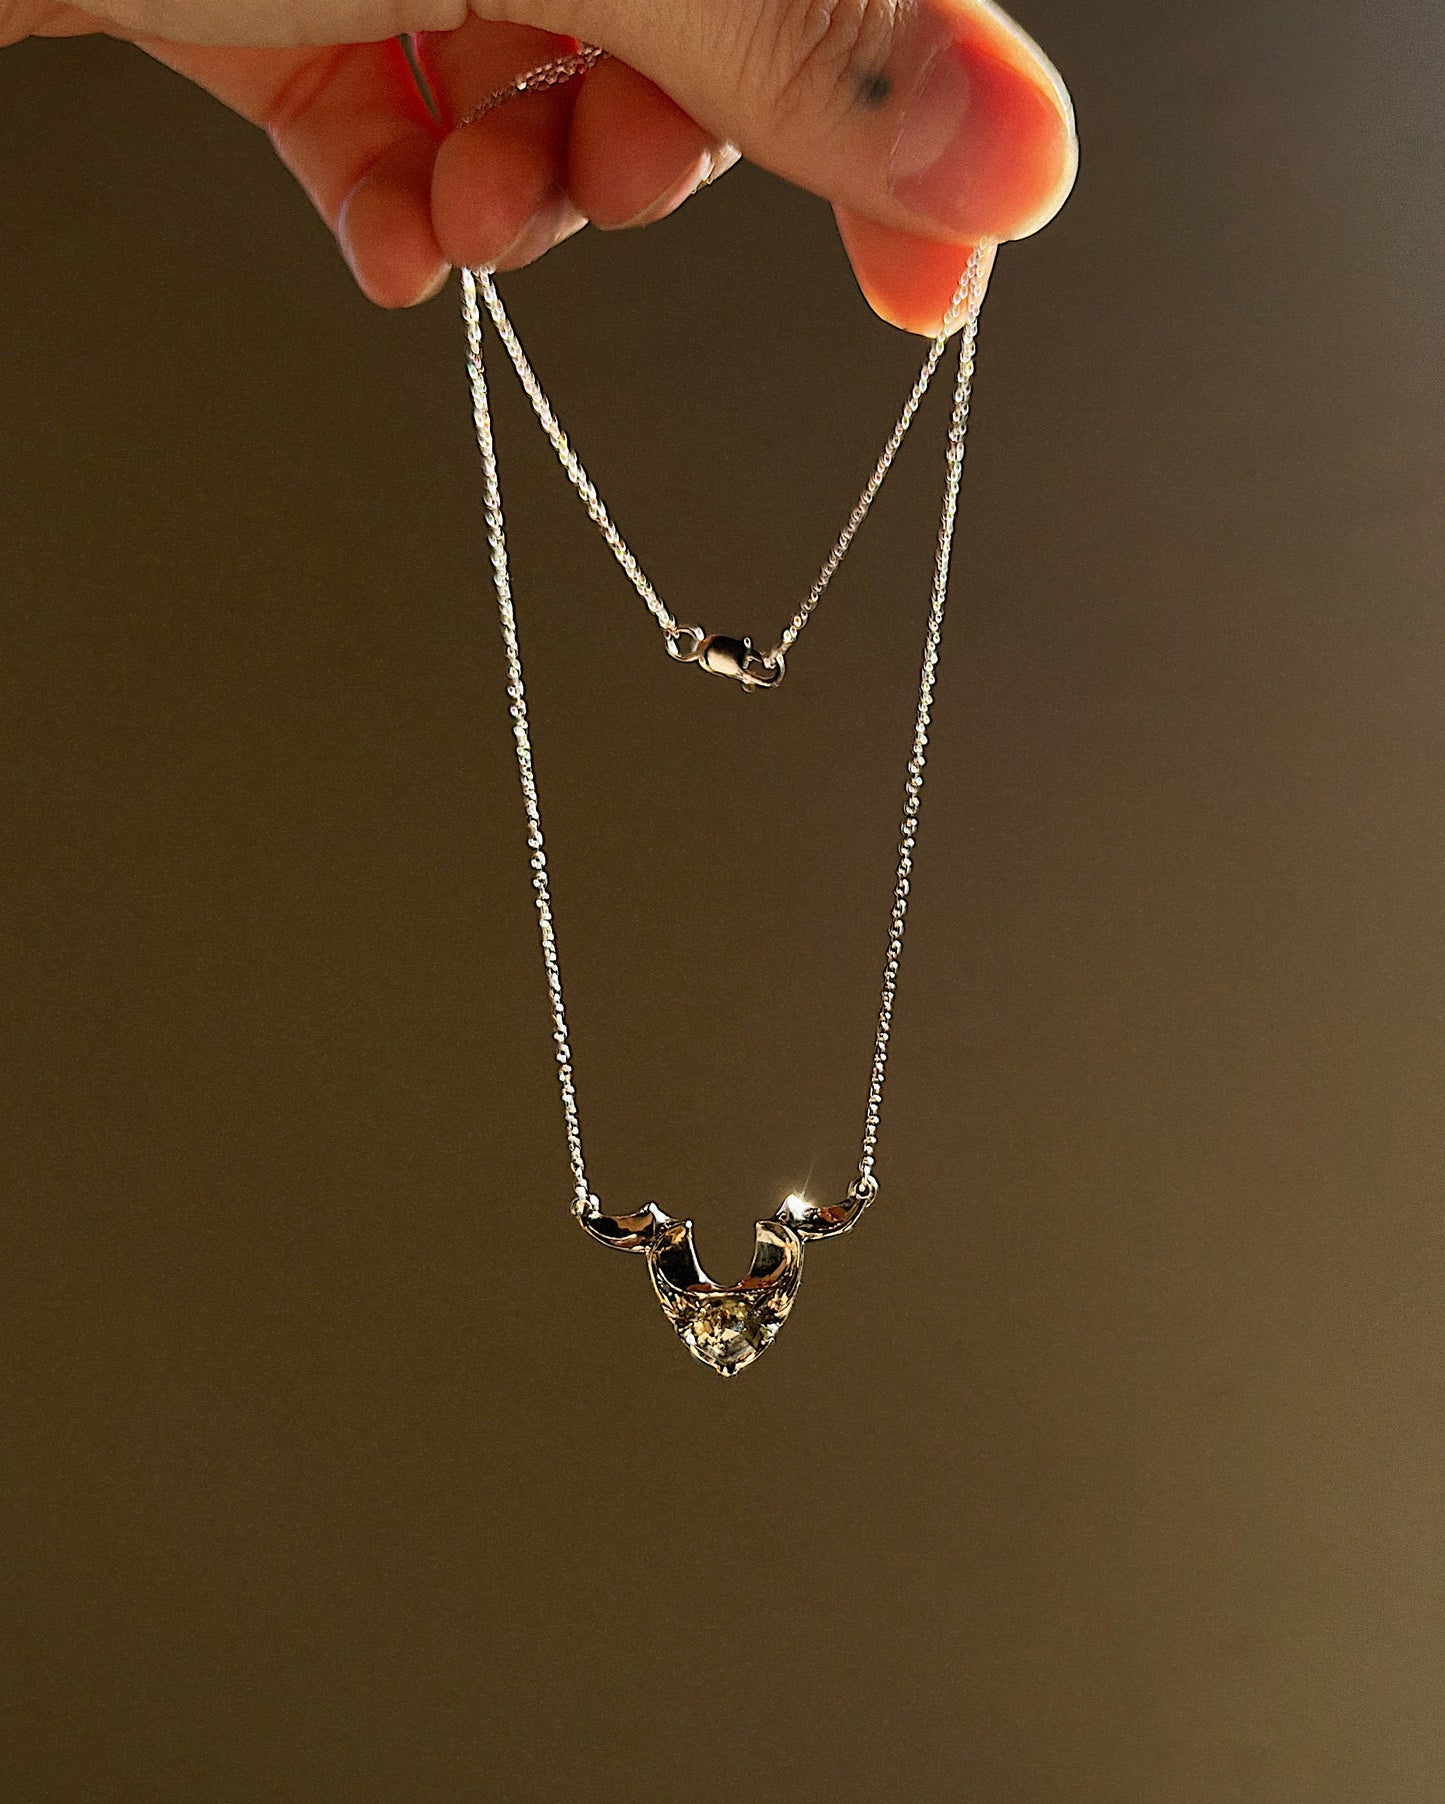 The Vault II // 14k White Gold + Diamond // Necklace